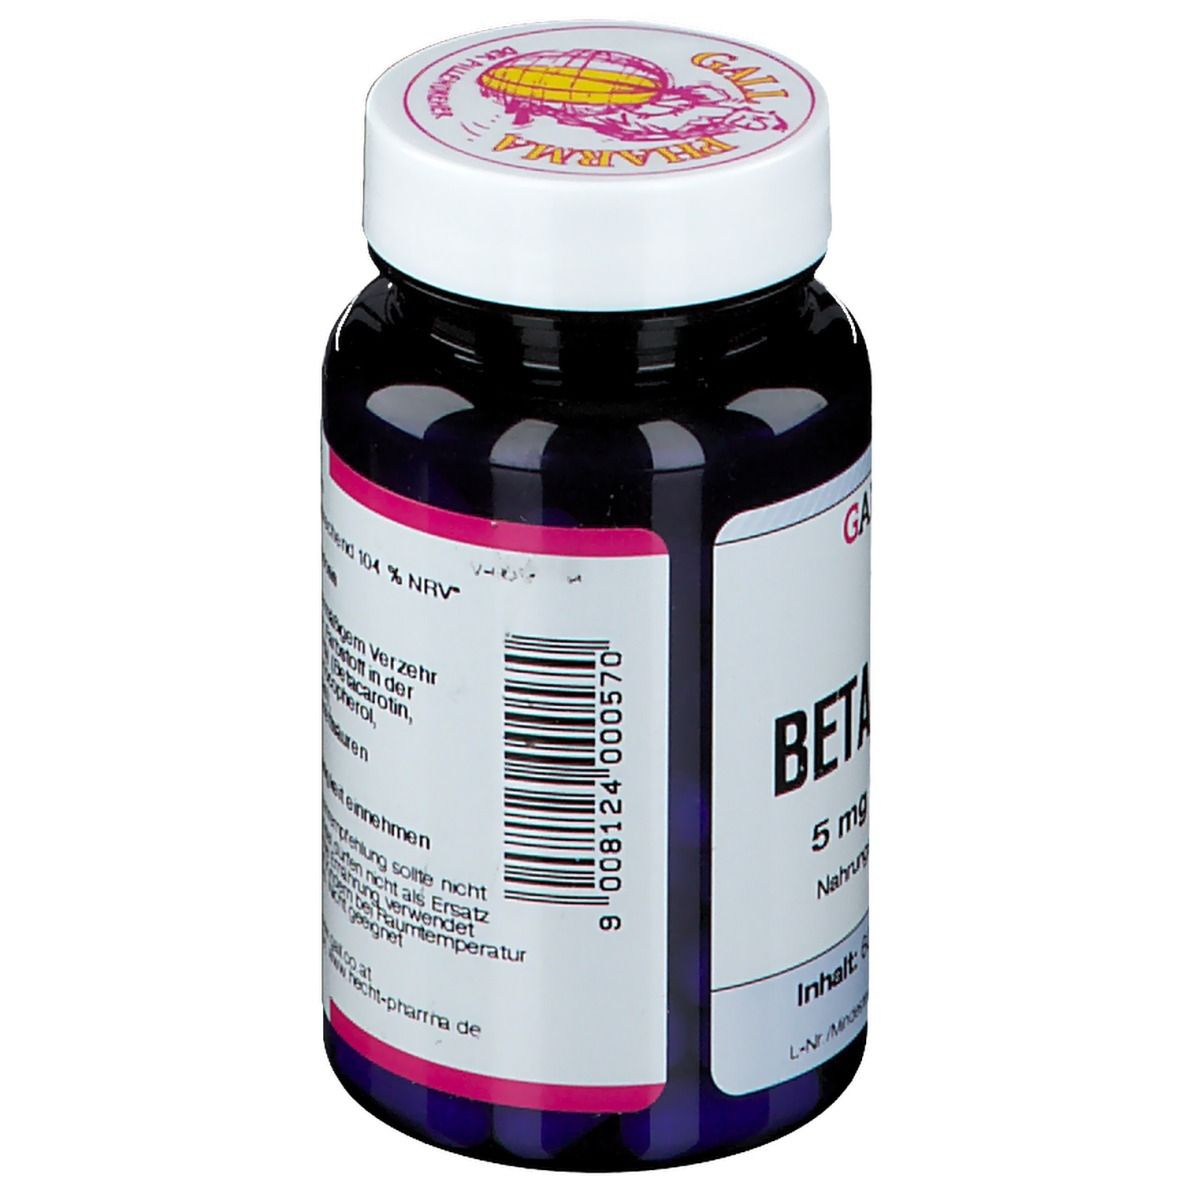 Beta-Carotin 5 mg